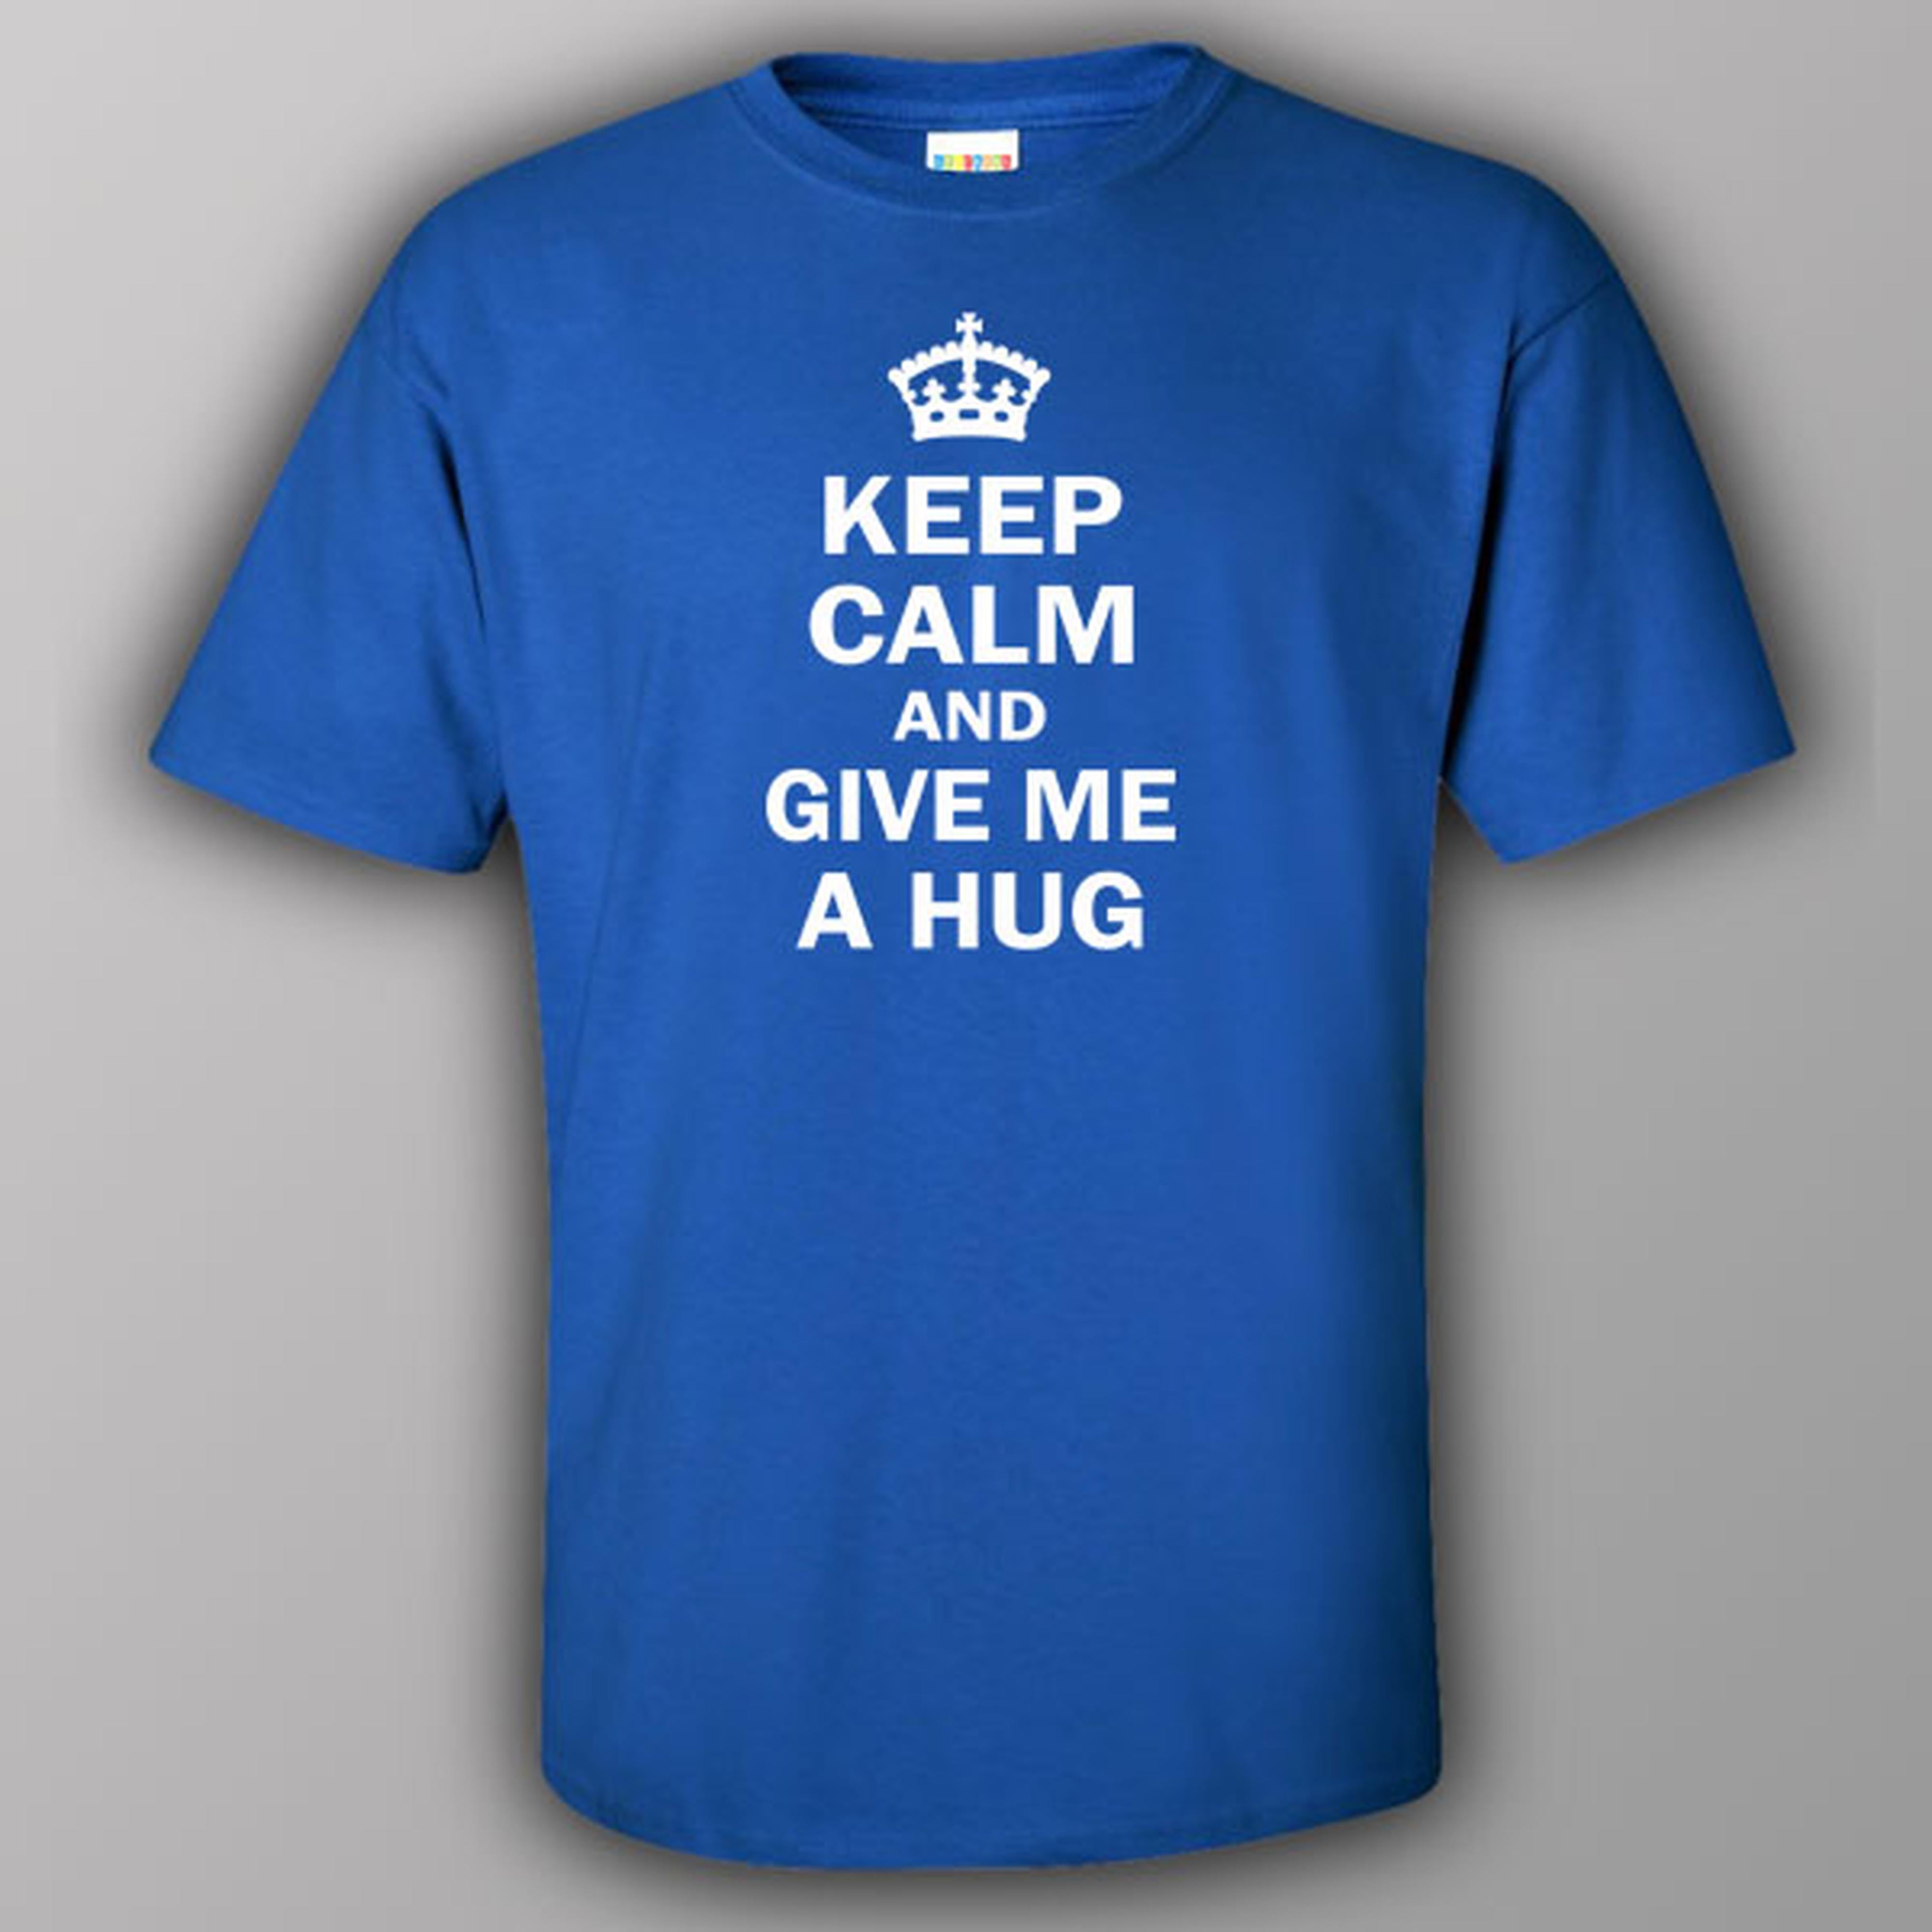 Keep calm and give me a hug - T-shirt